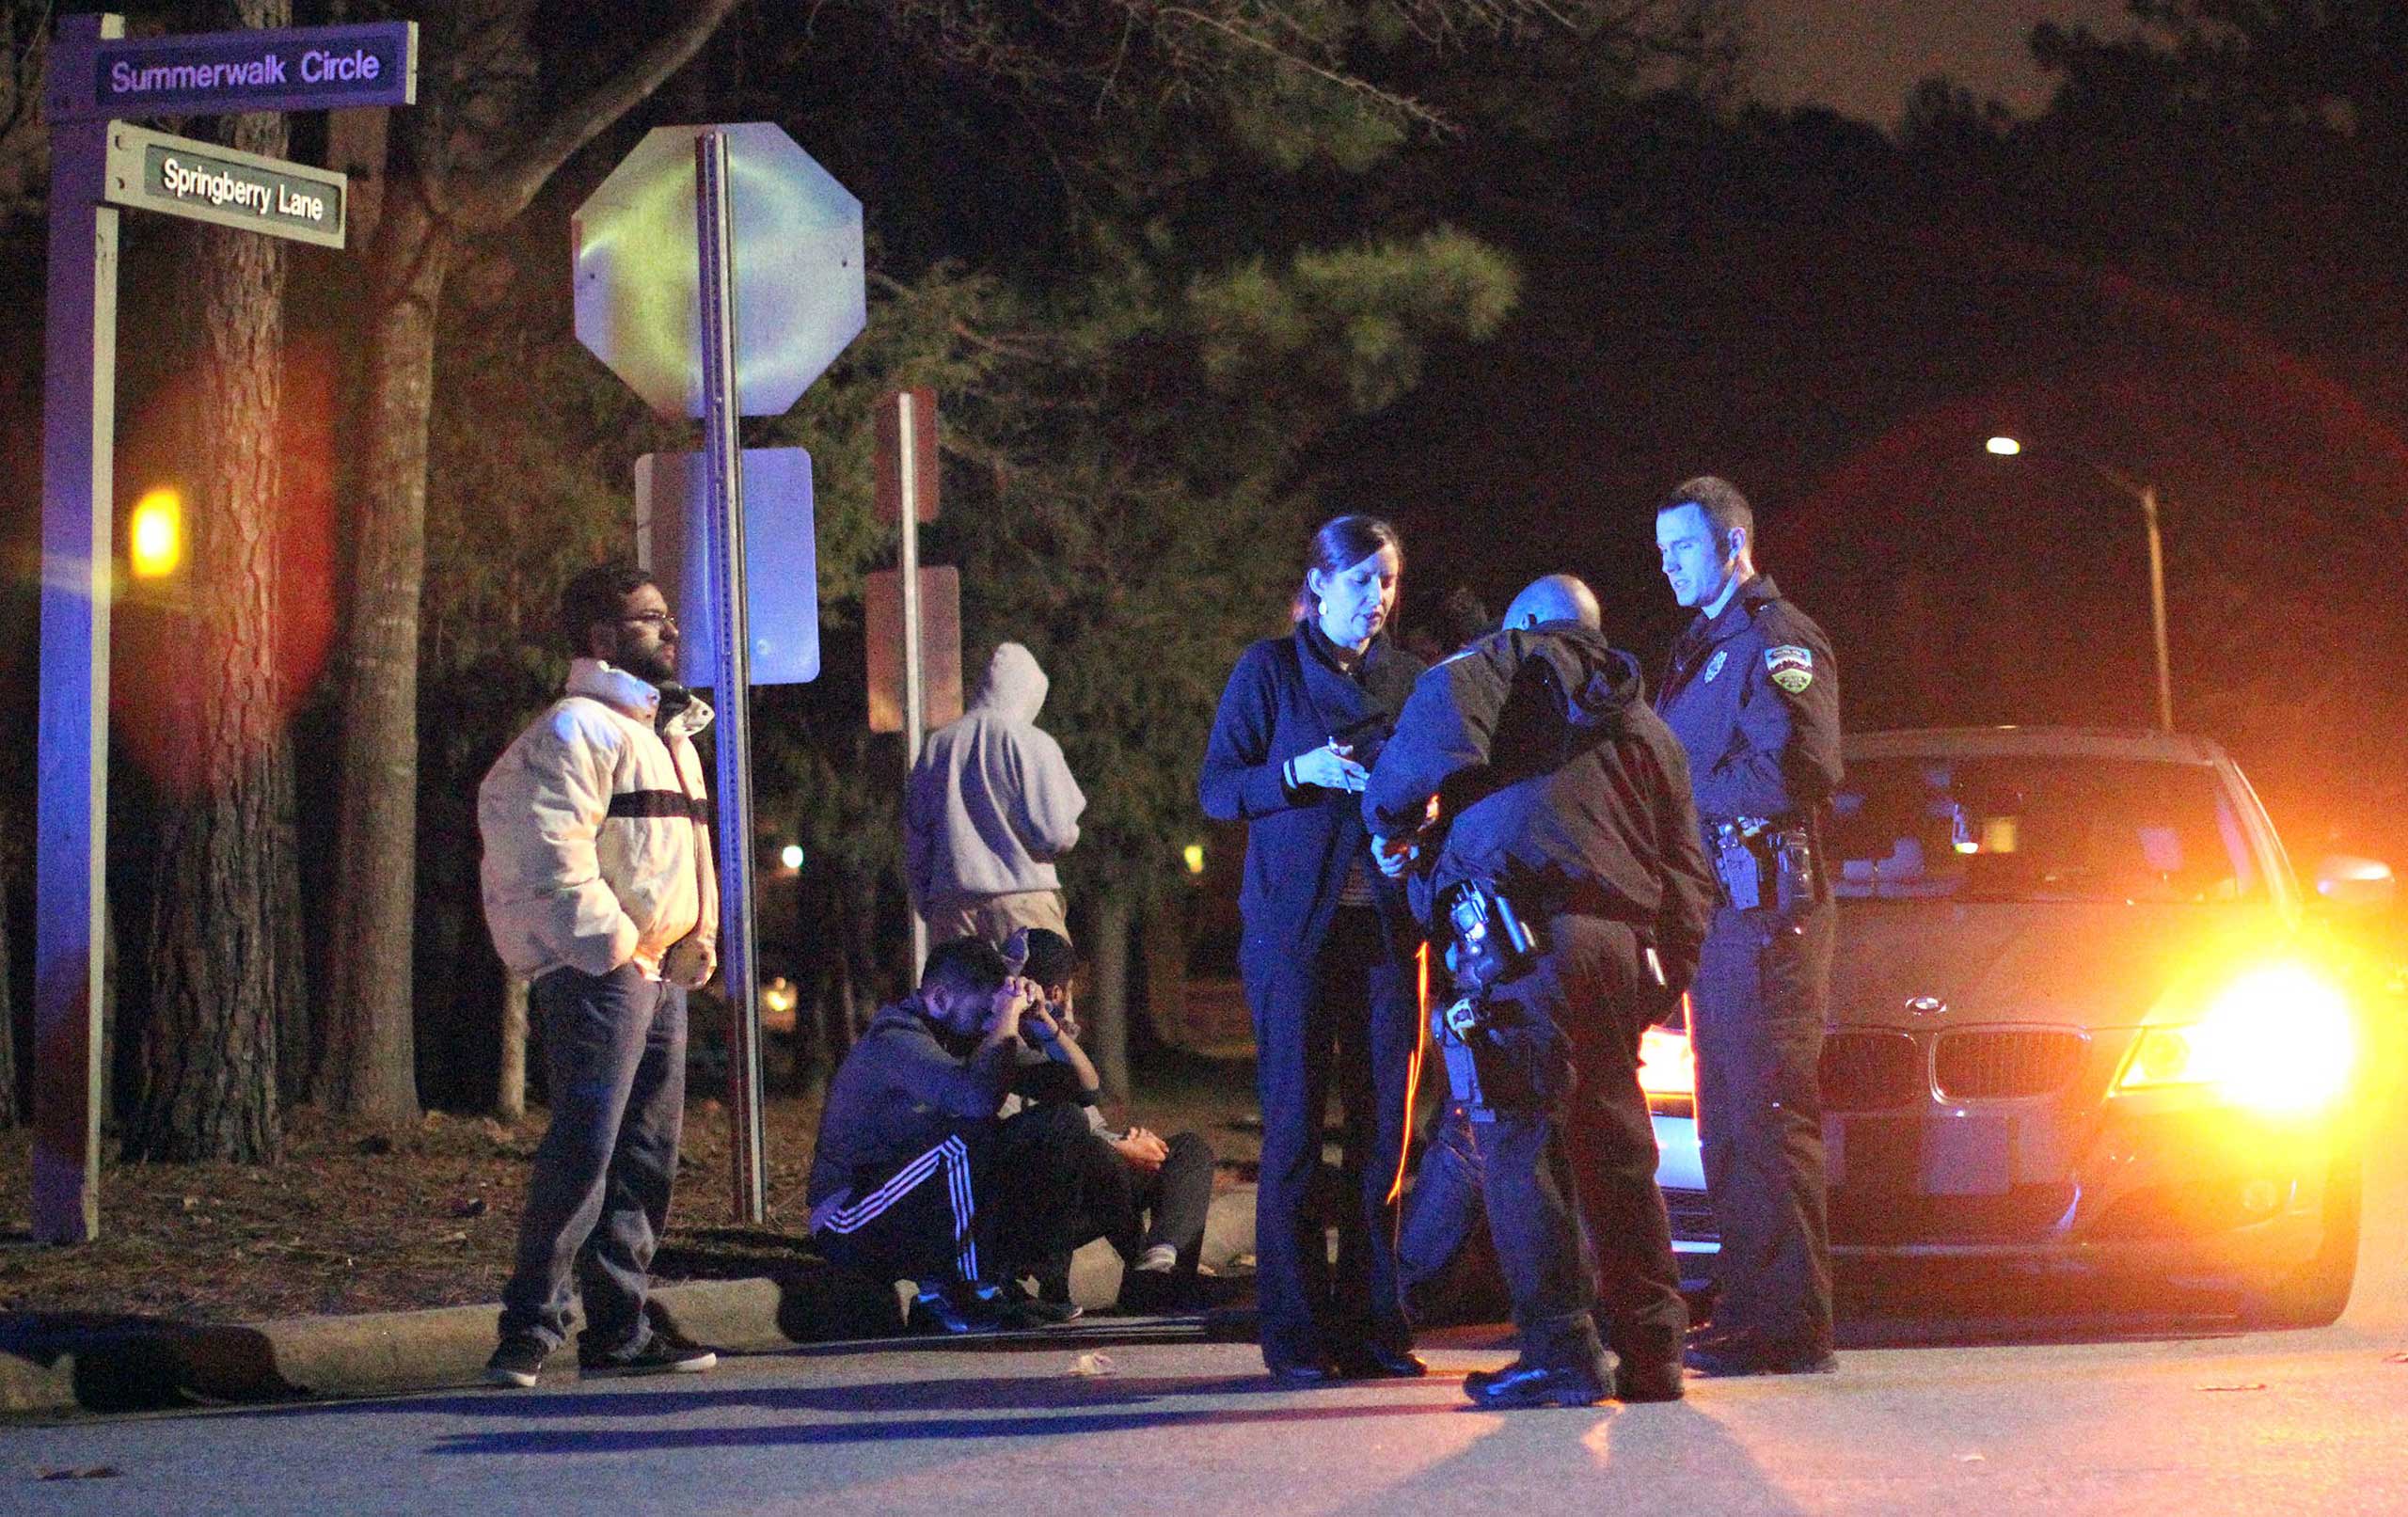 Chapel Hill police officers investigate the scene of three murders near Summerwalk Circle in Chapel Hill, N.C., Feb. 10, 2015. (Al Drago—AP)